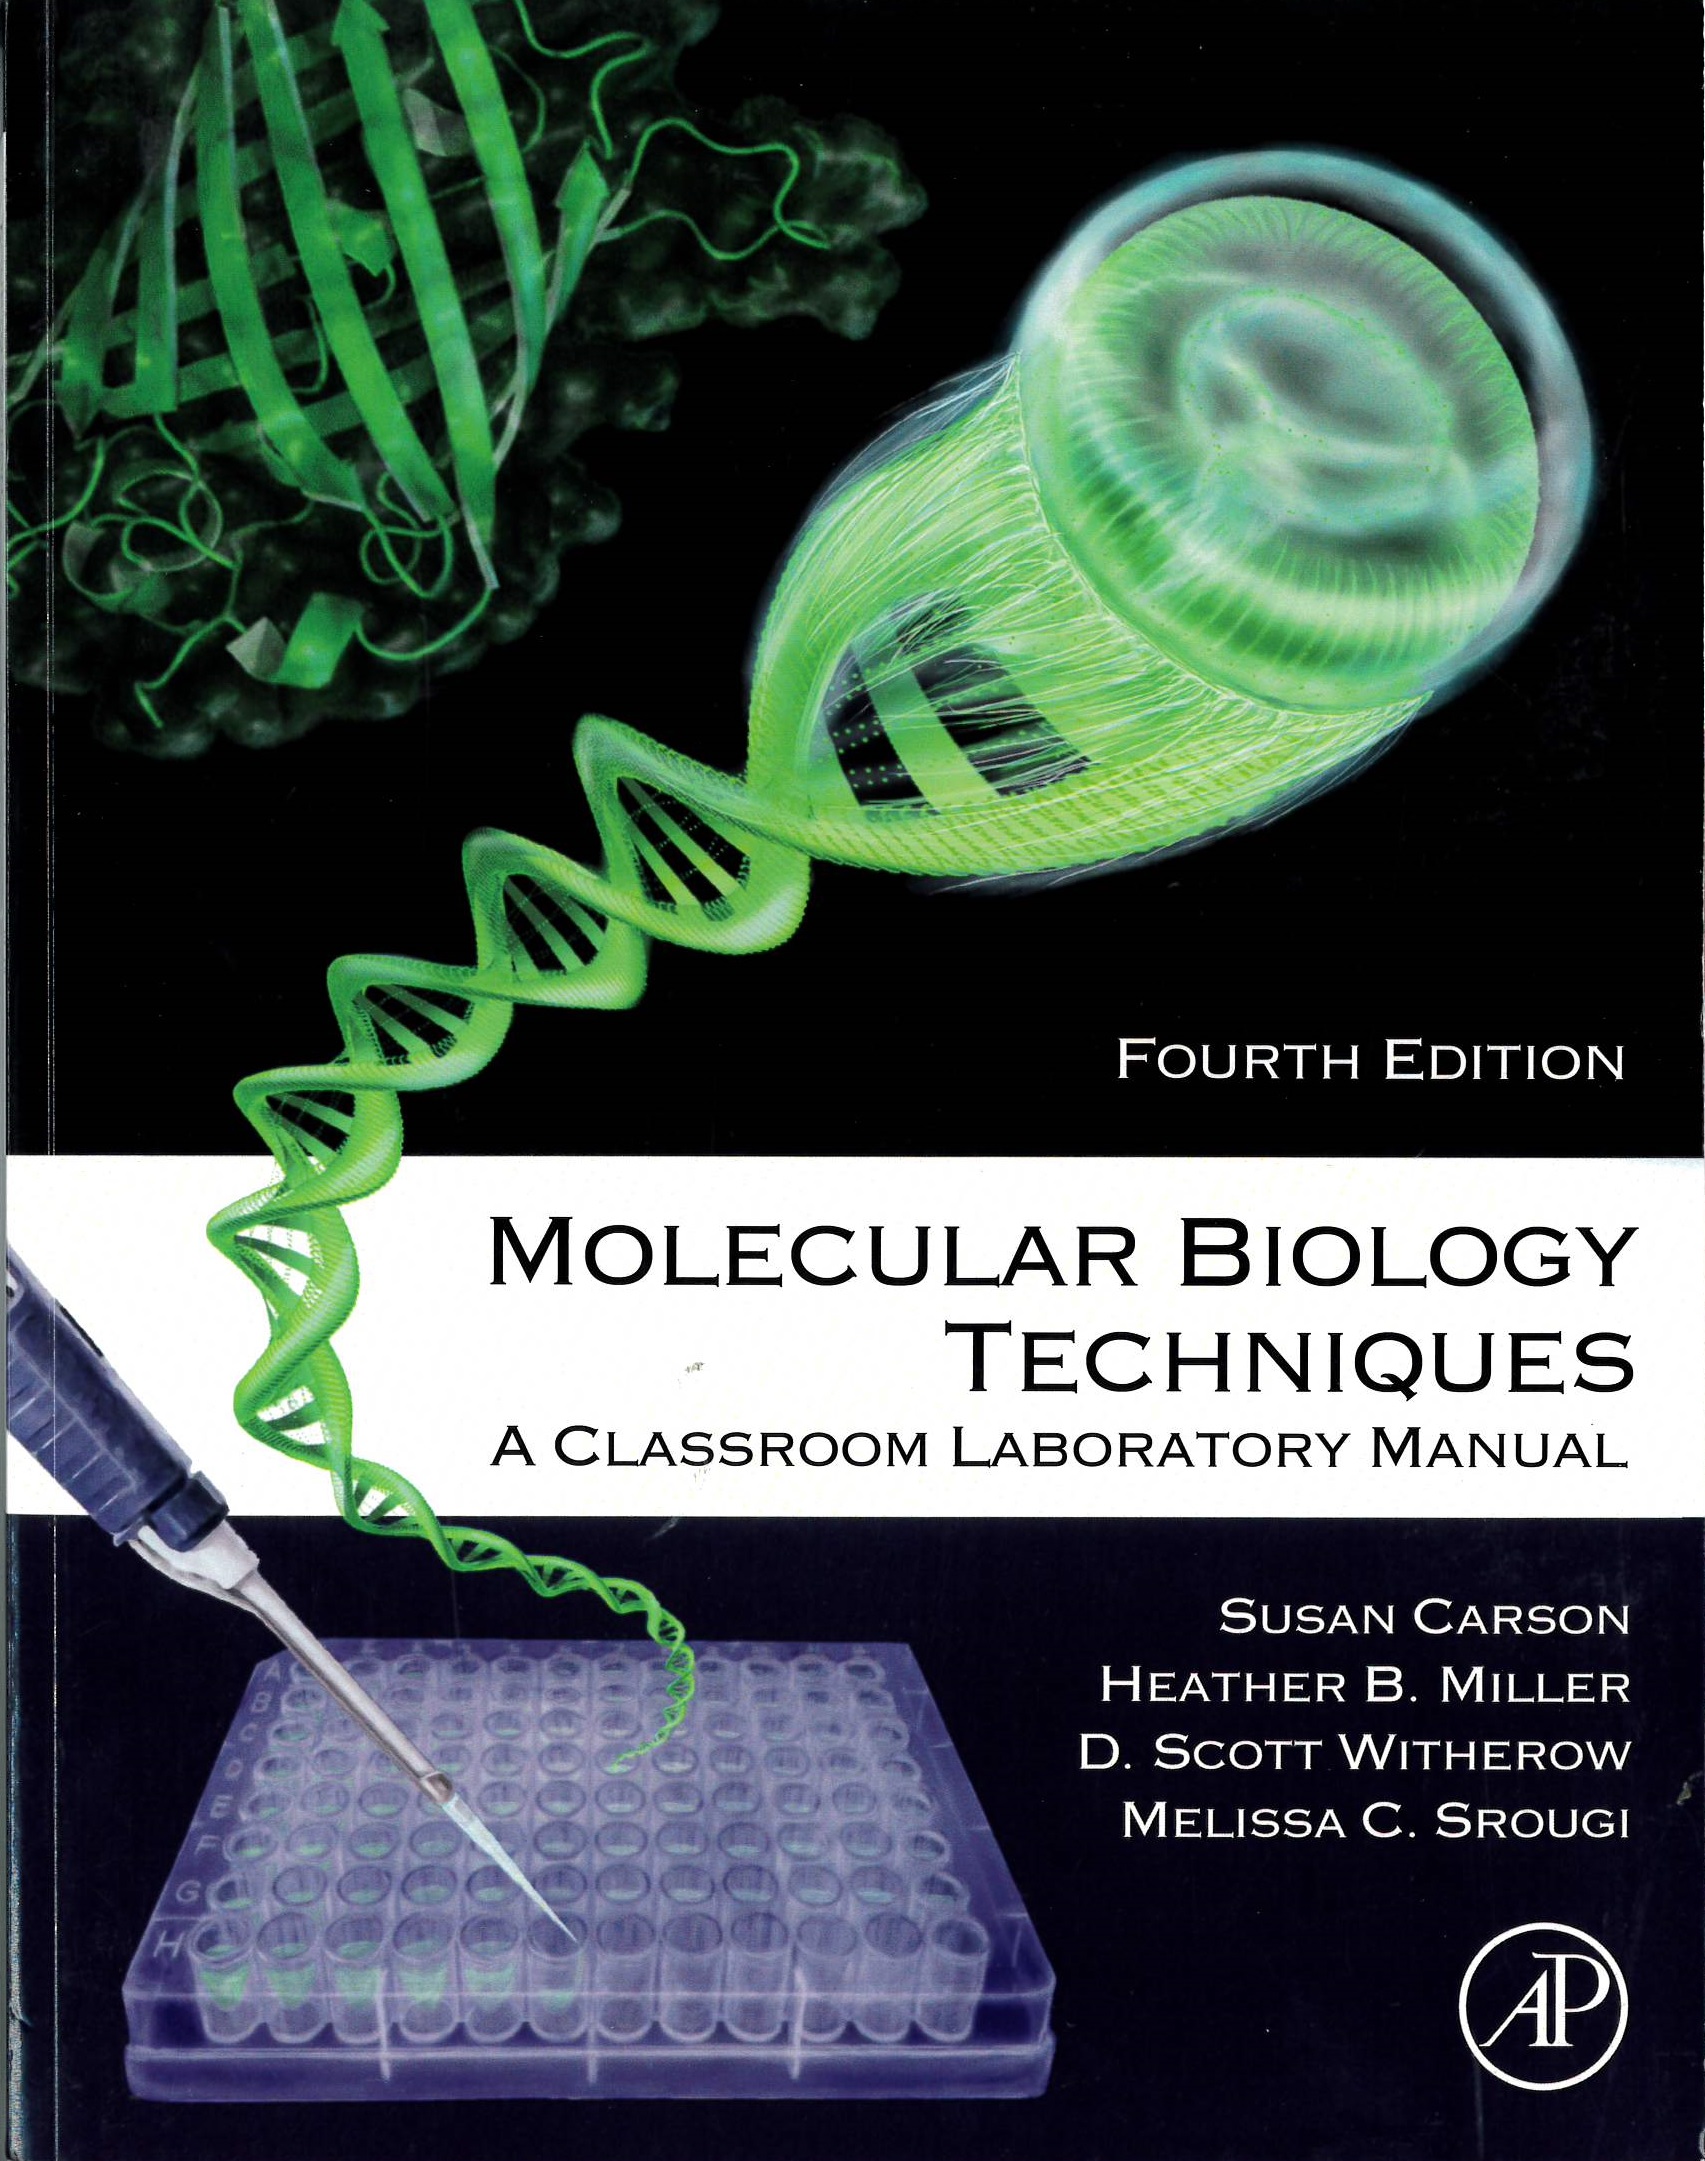 Molecular biology techniques : a classroom laboratory manual